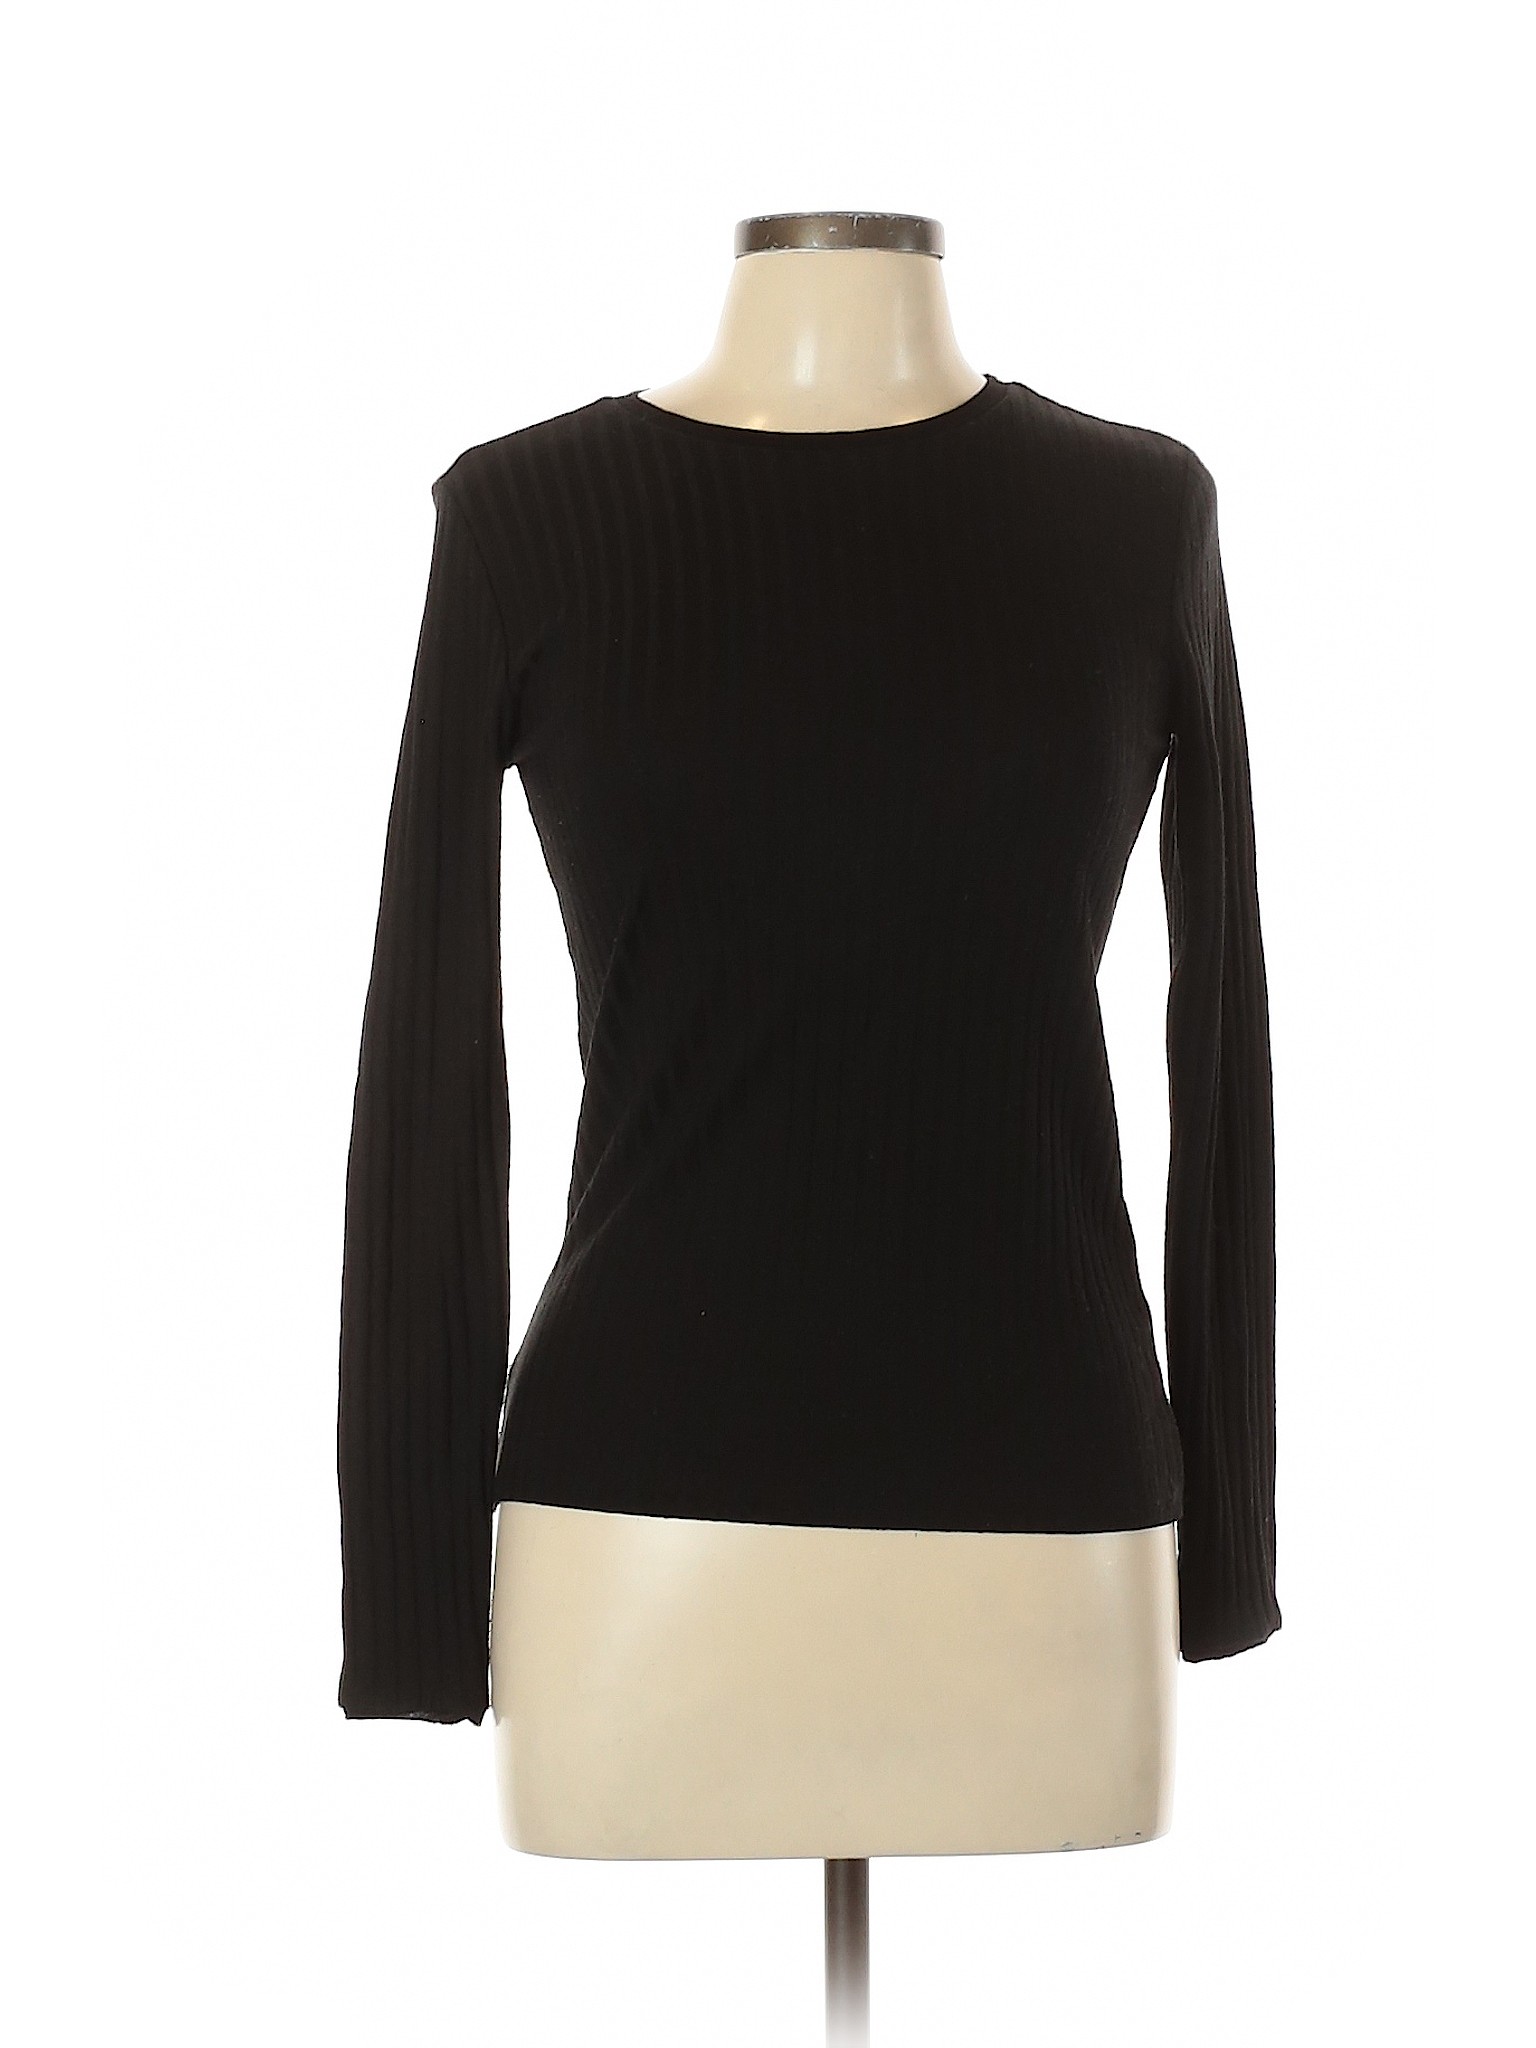 Zara W&B Collection Women Black Pullover Sweater L | eBay